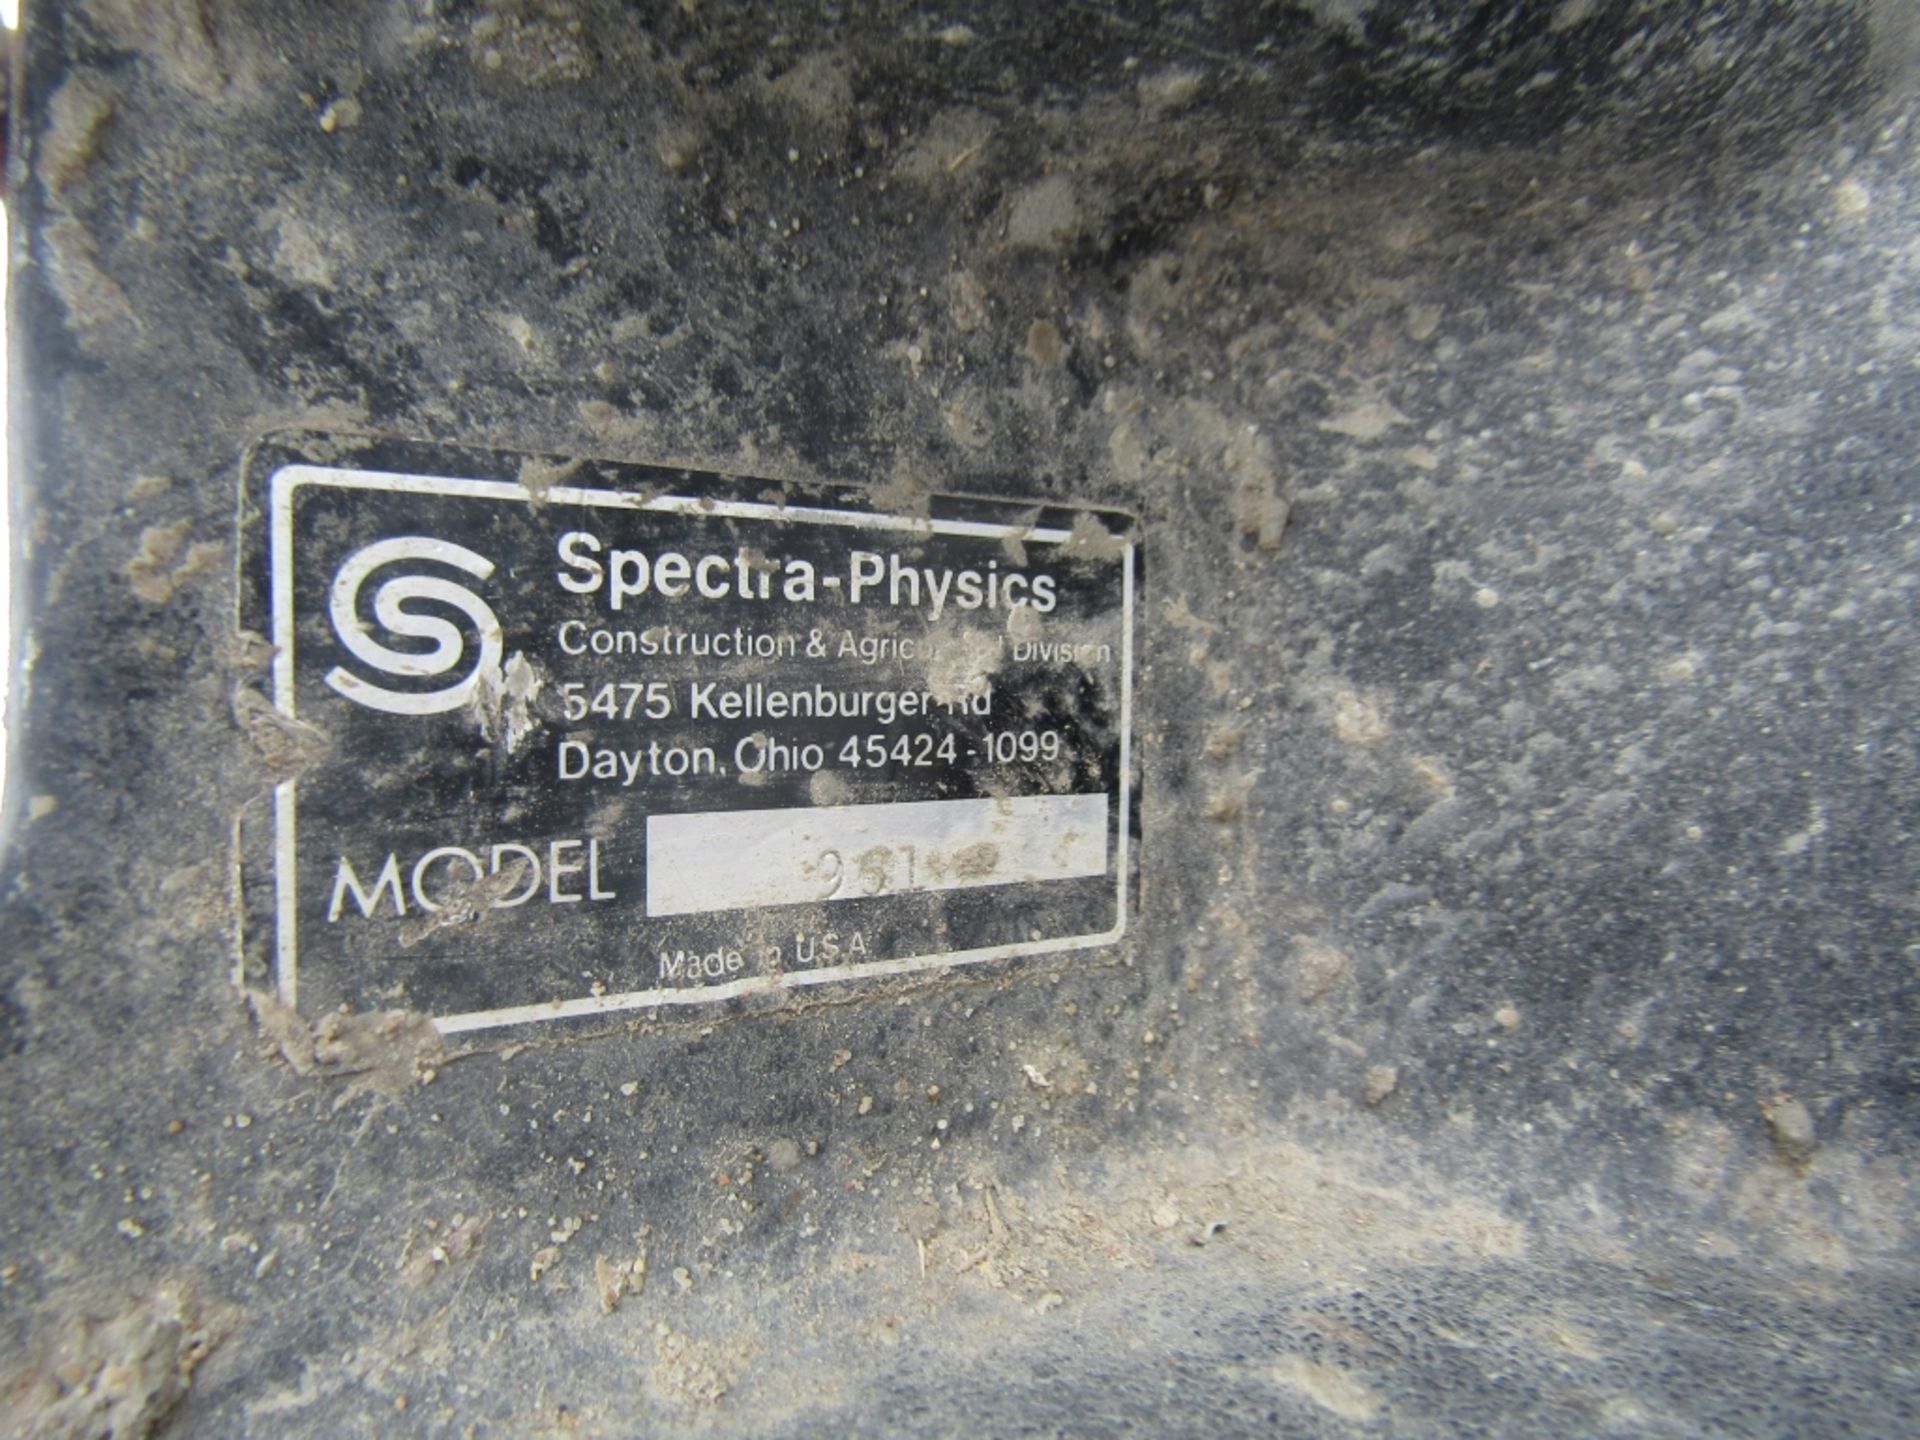 Spectra-Physics Model #951 - Image 2 of 2